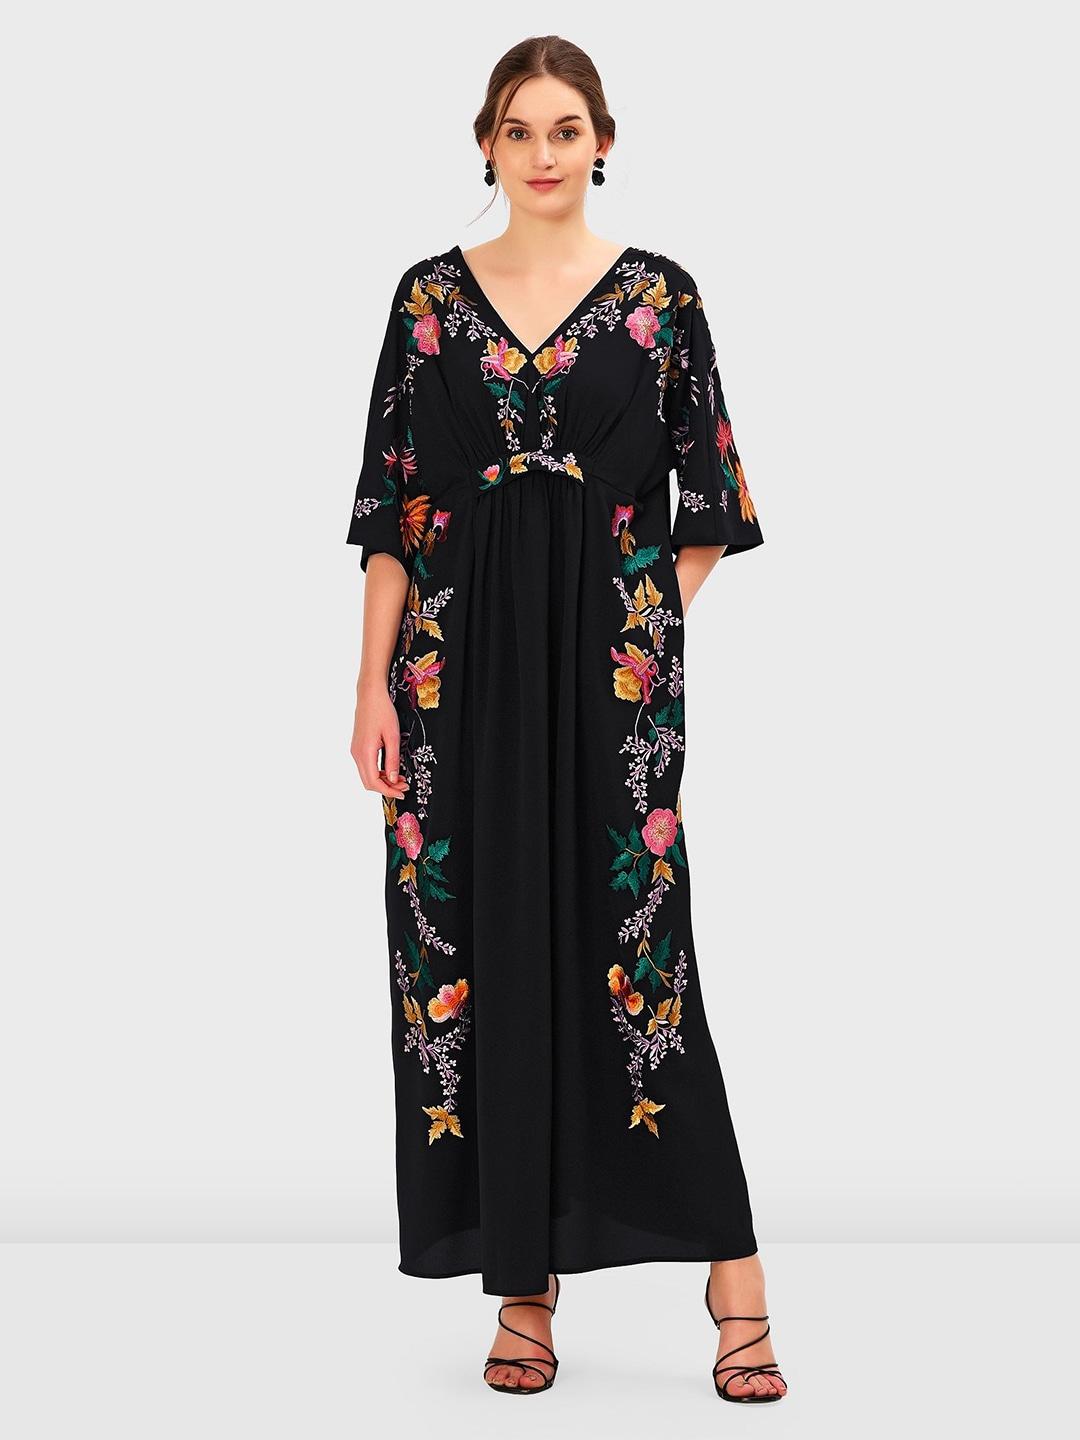 zapelle-floral-printed-flared-sleeves-gathered-kaftan-dress